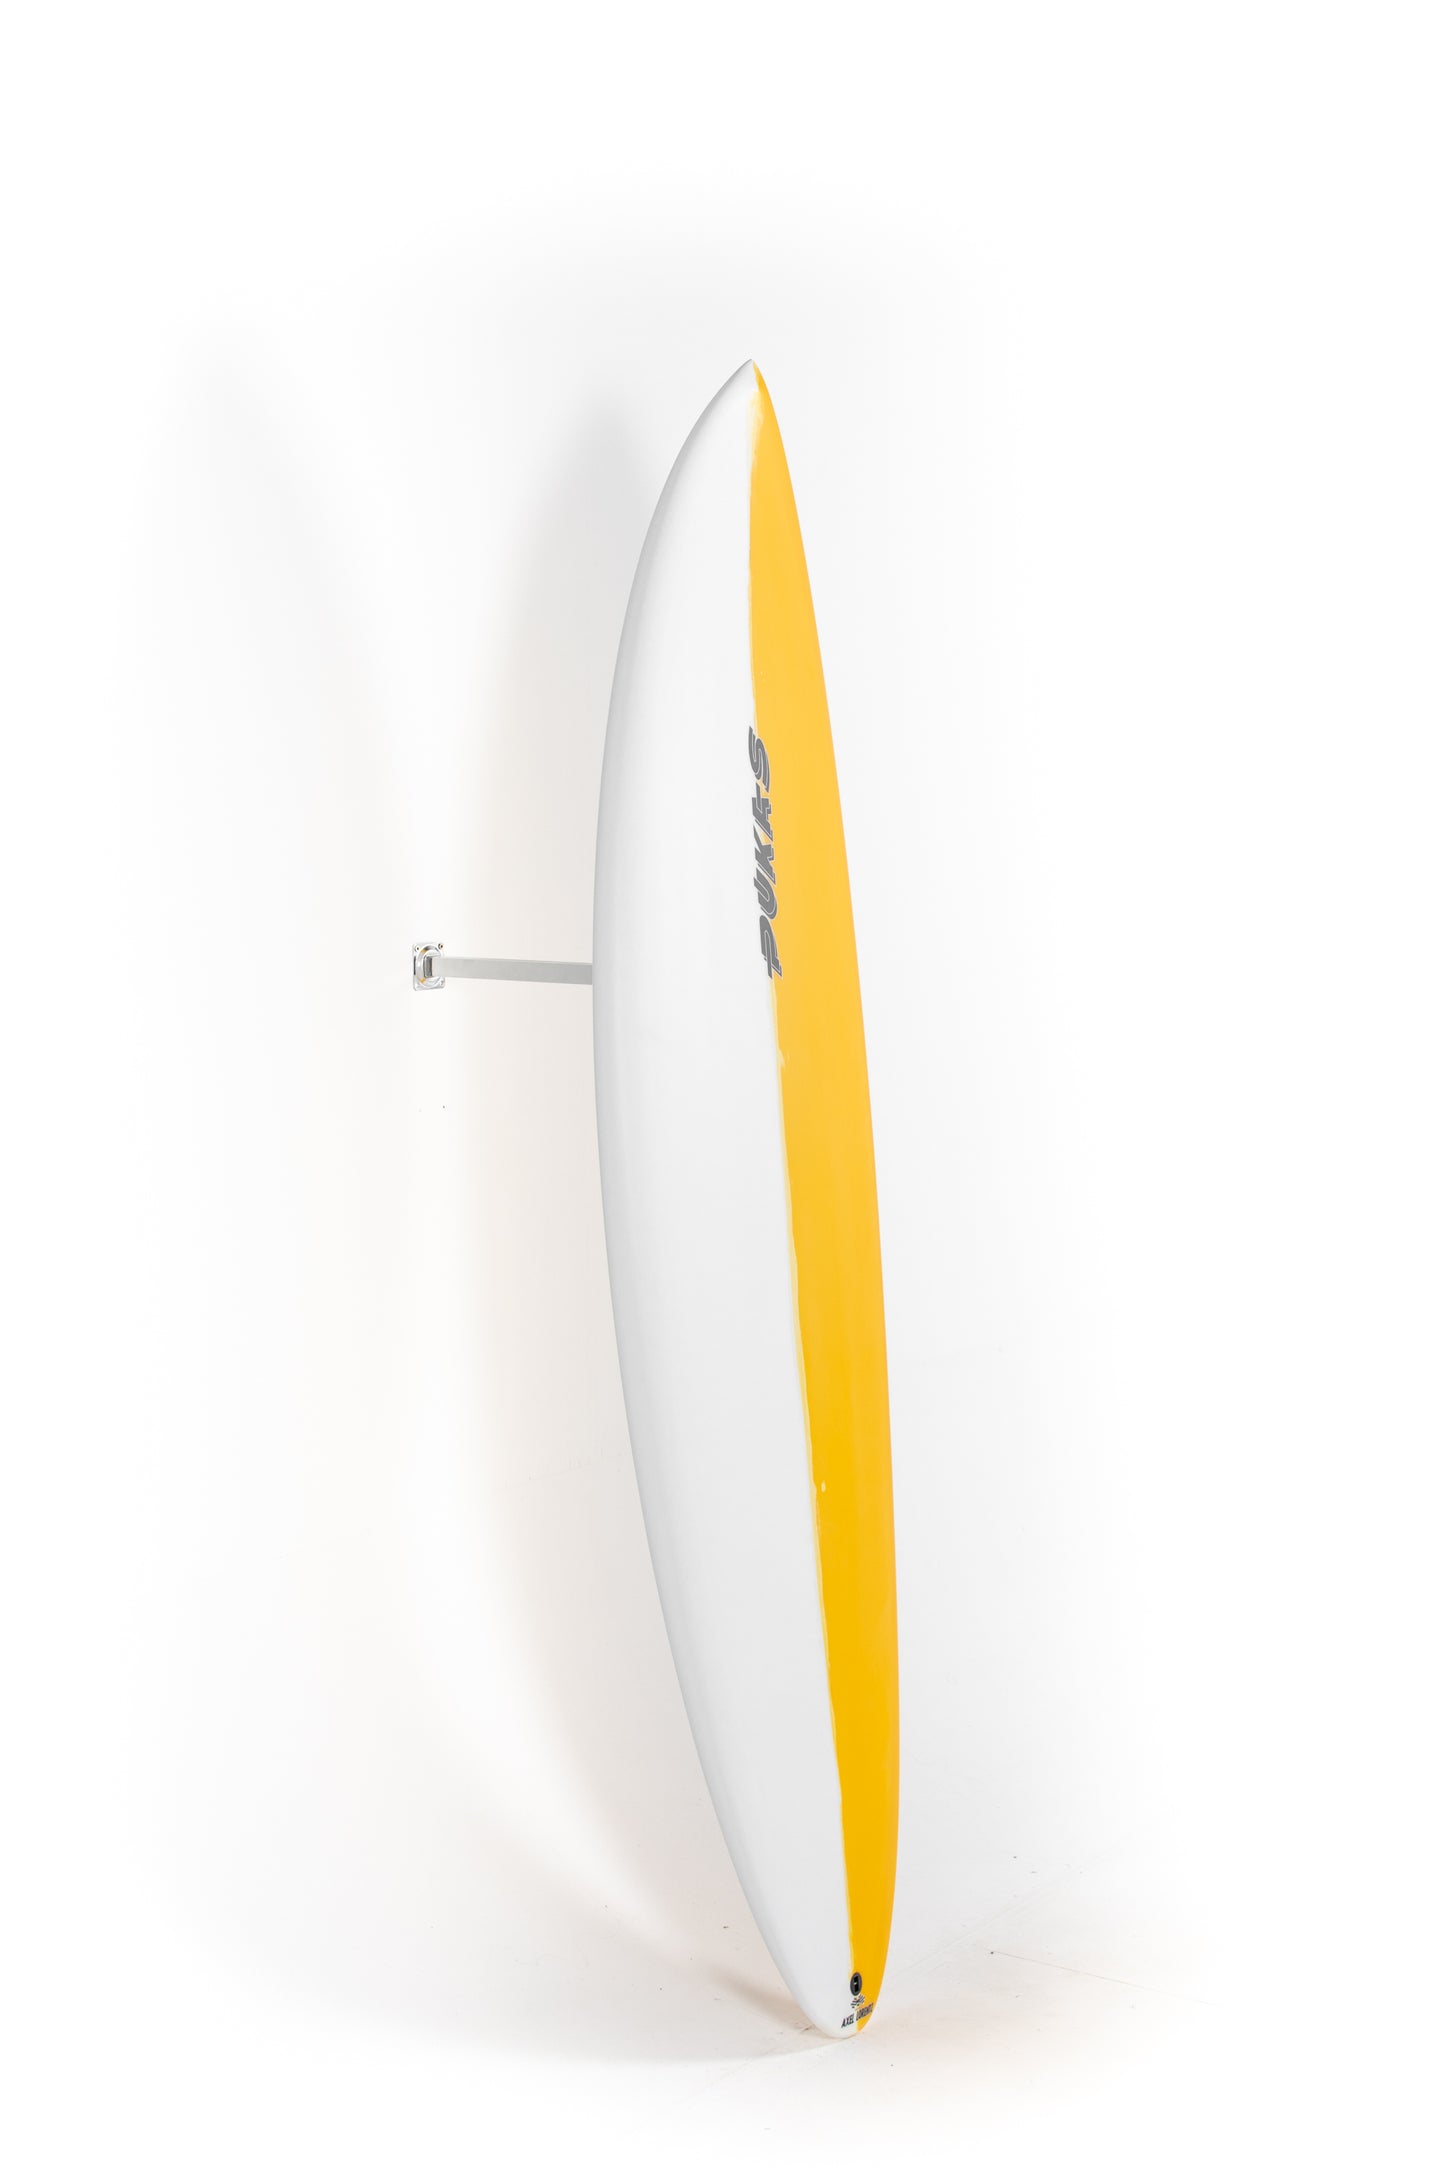 
                  
                    Pukas Surf Shop - Pukas Surfboard - ORIGINAL 69 by Axel Lorentz - 6’6” x 21,75 x 2,93 - 45L - AX08556
                  
                